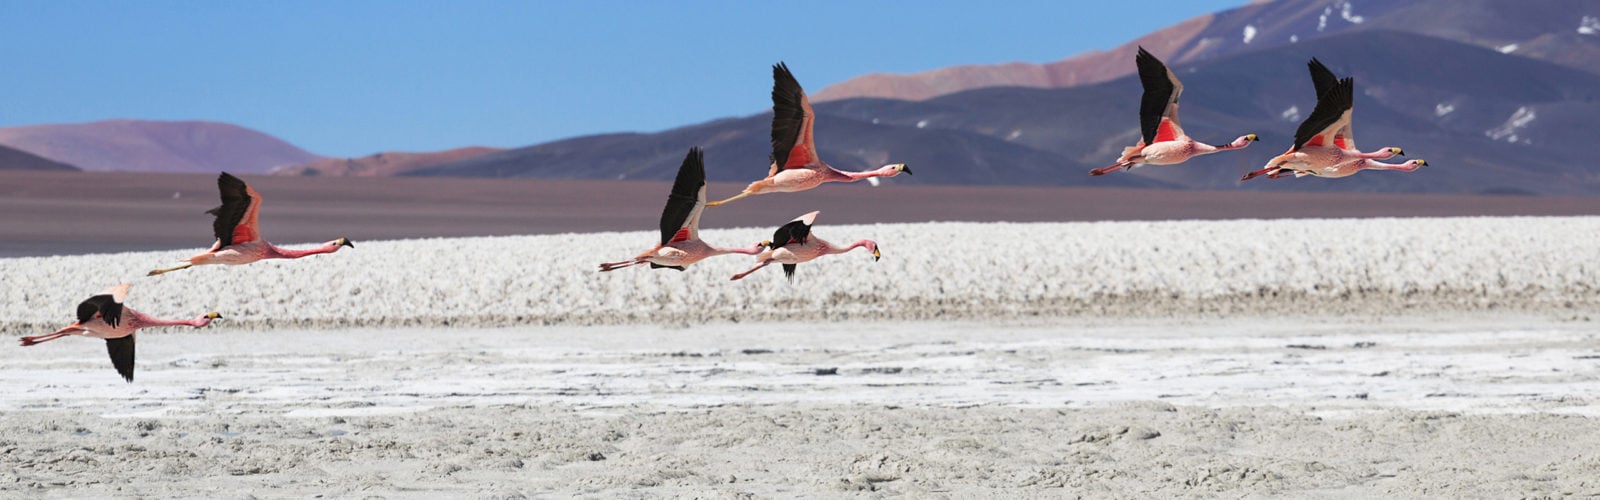 puna-desert-argentina-flamingos